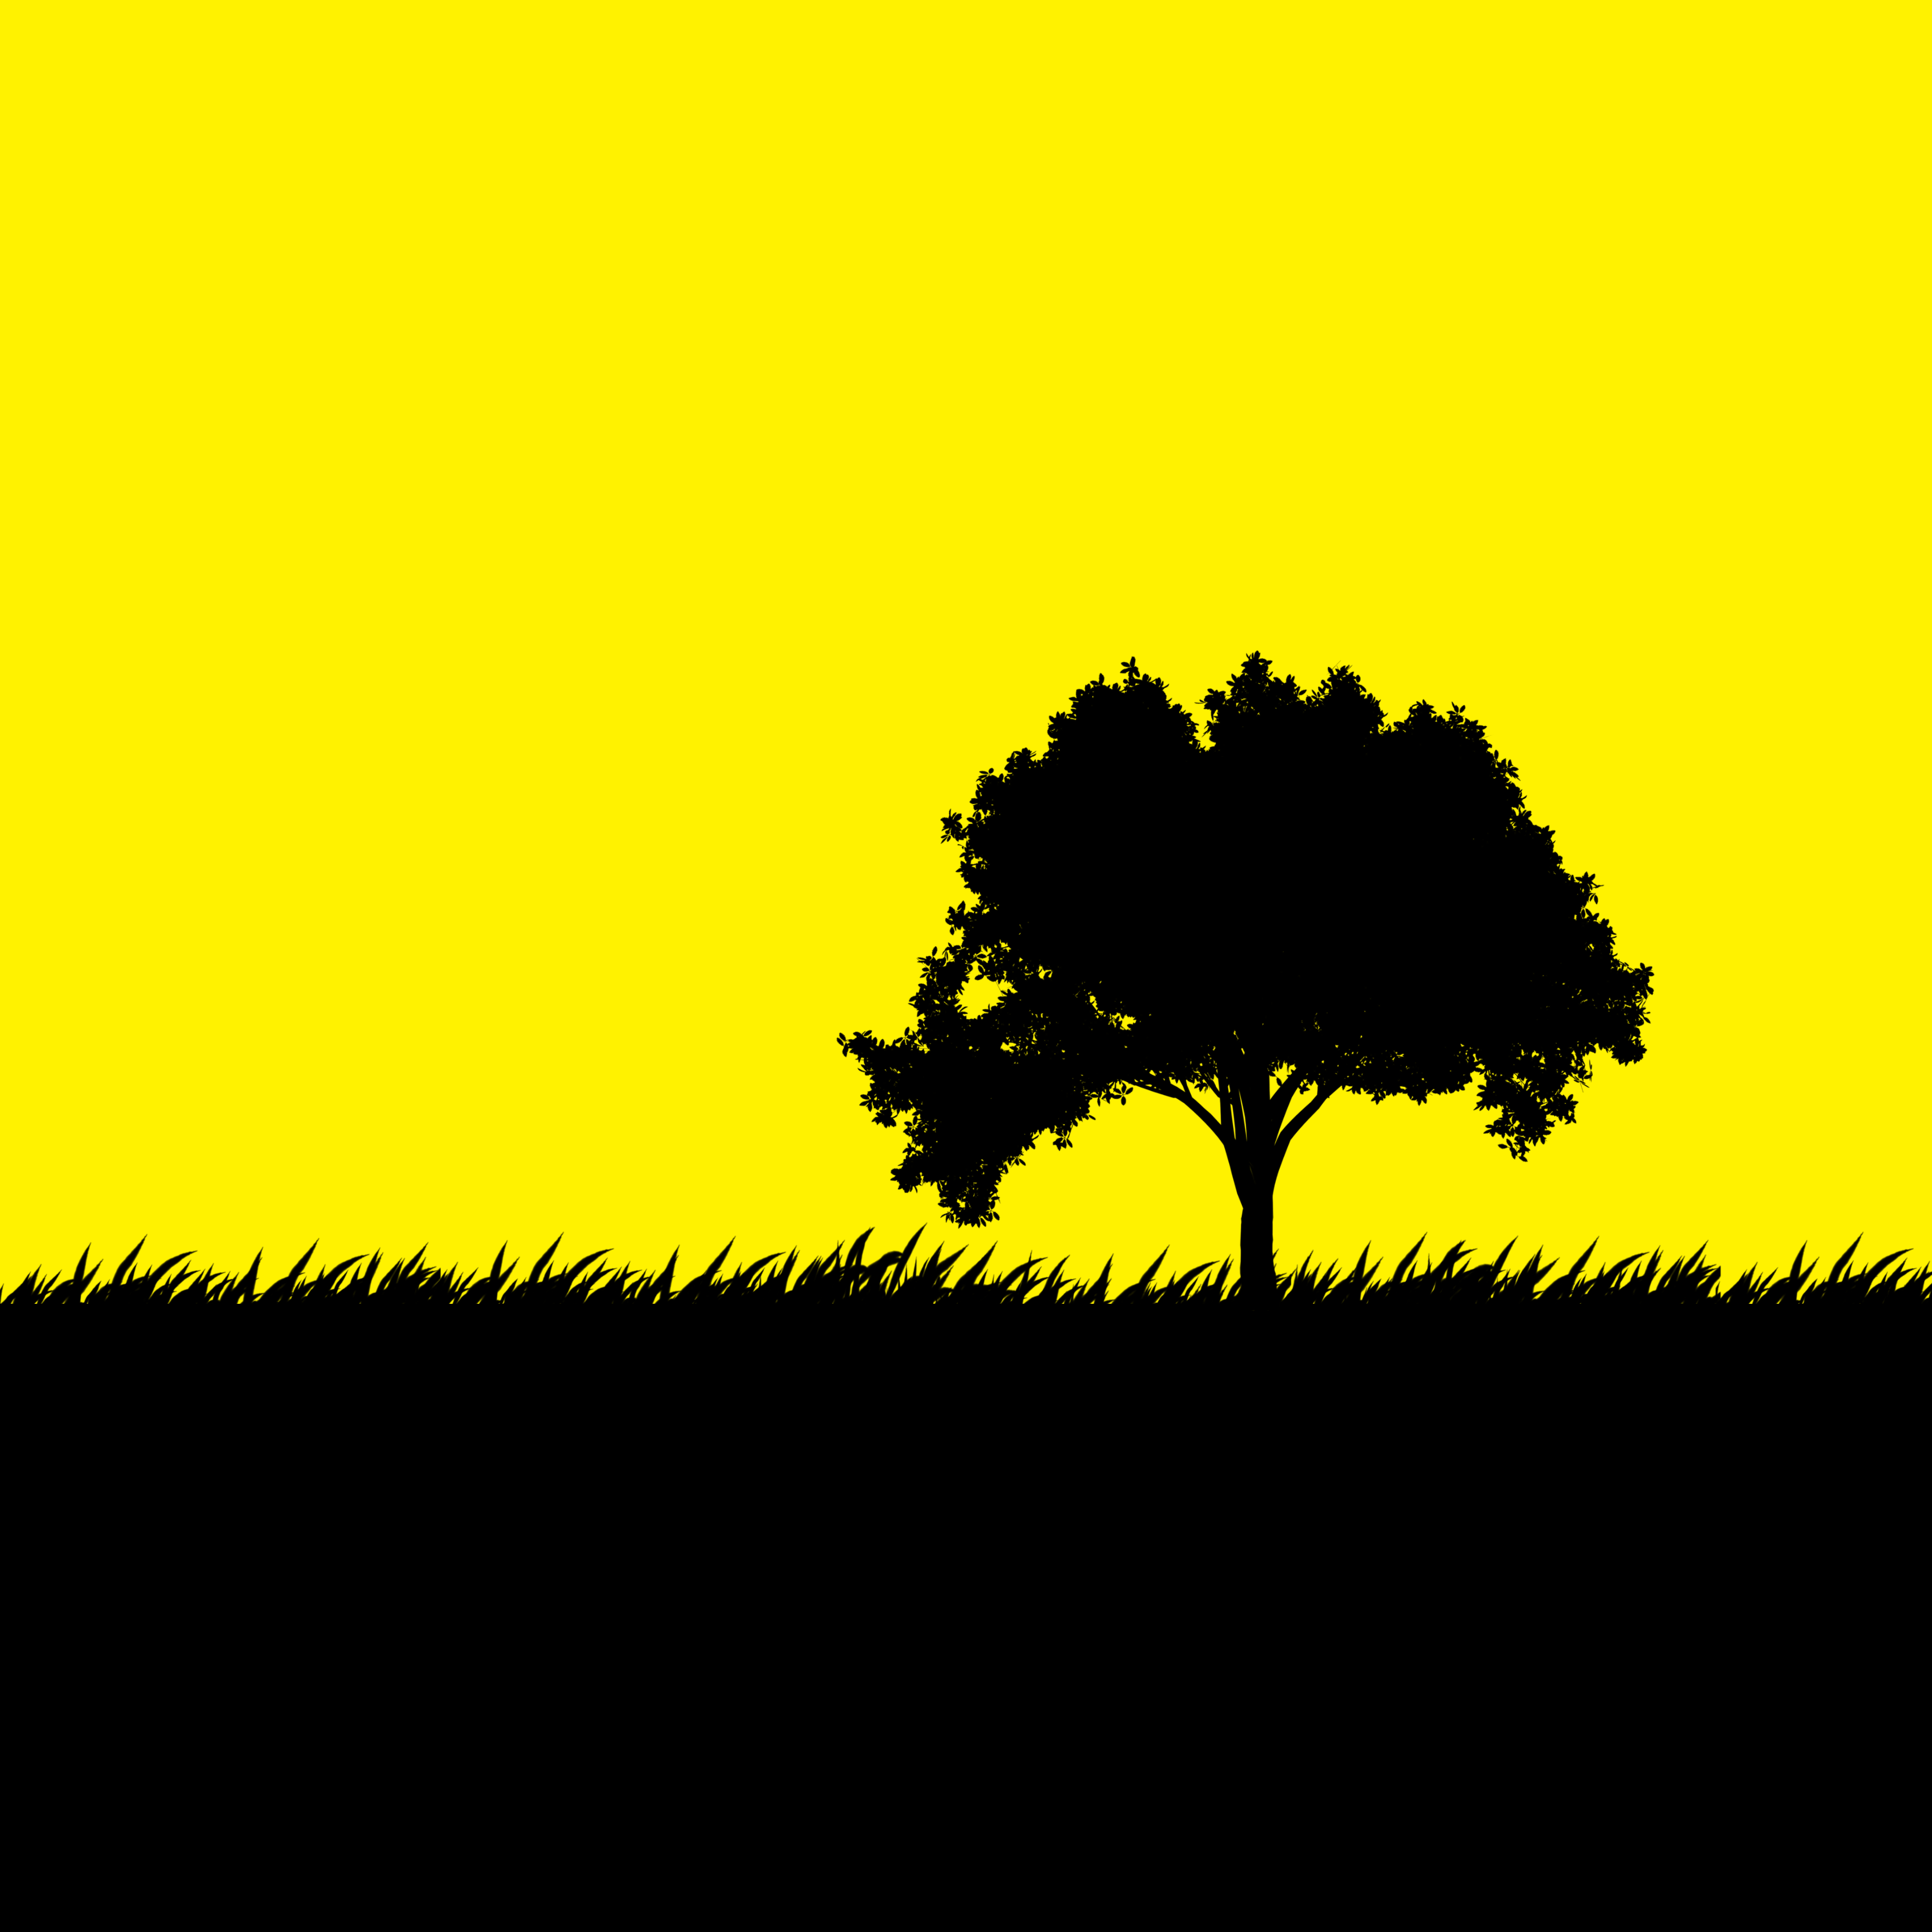 General 3543x3543 minimalism tree bark trees simple background yellow black yellow background artwork